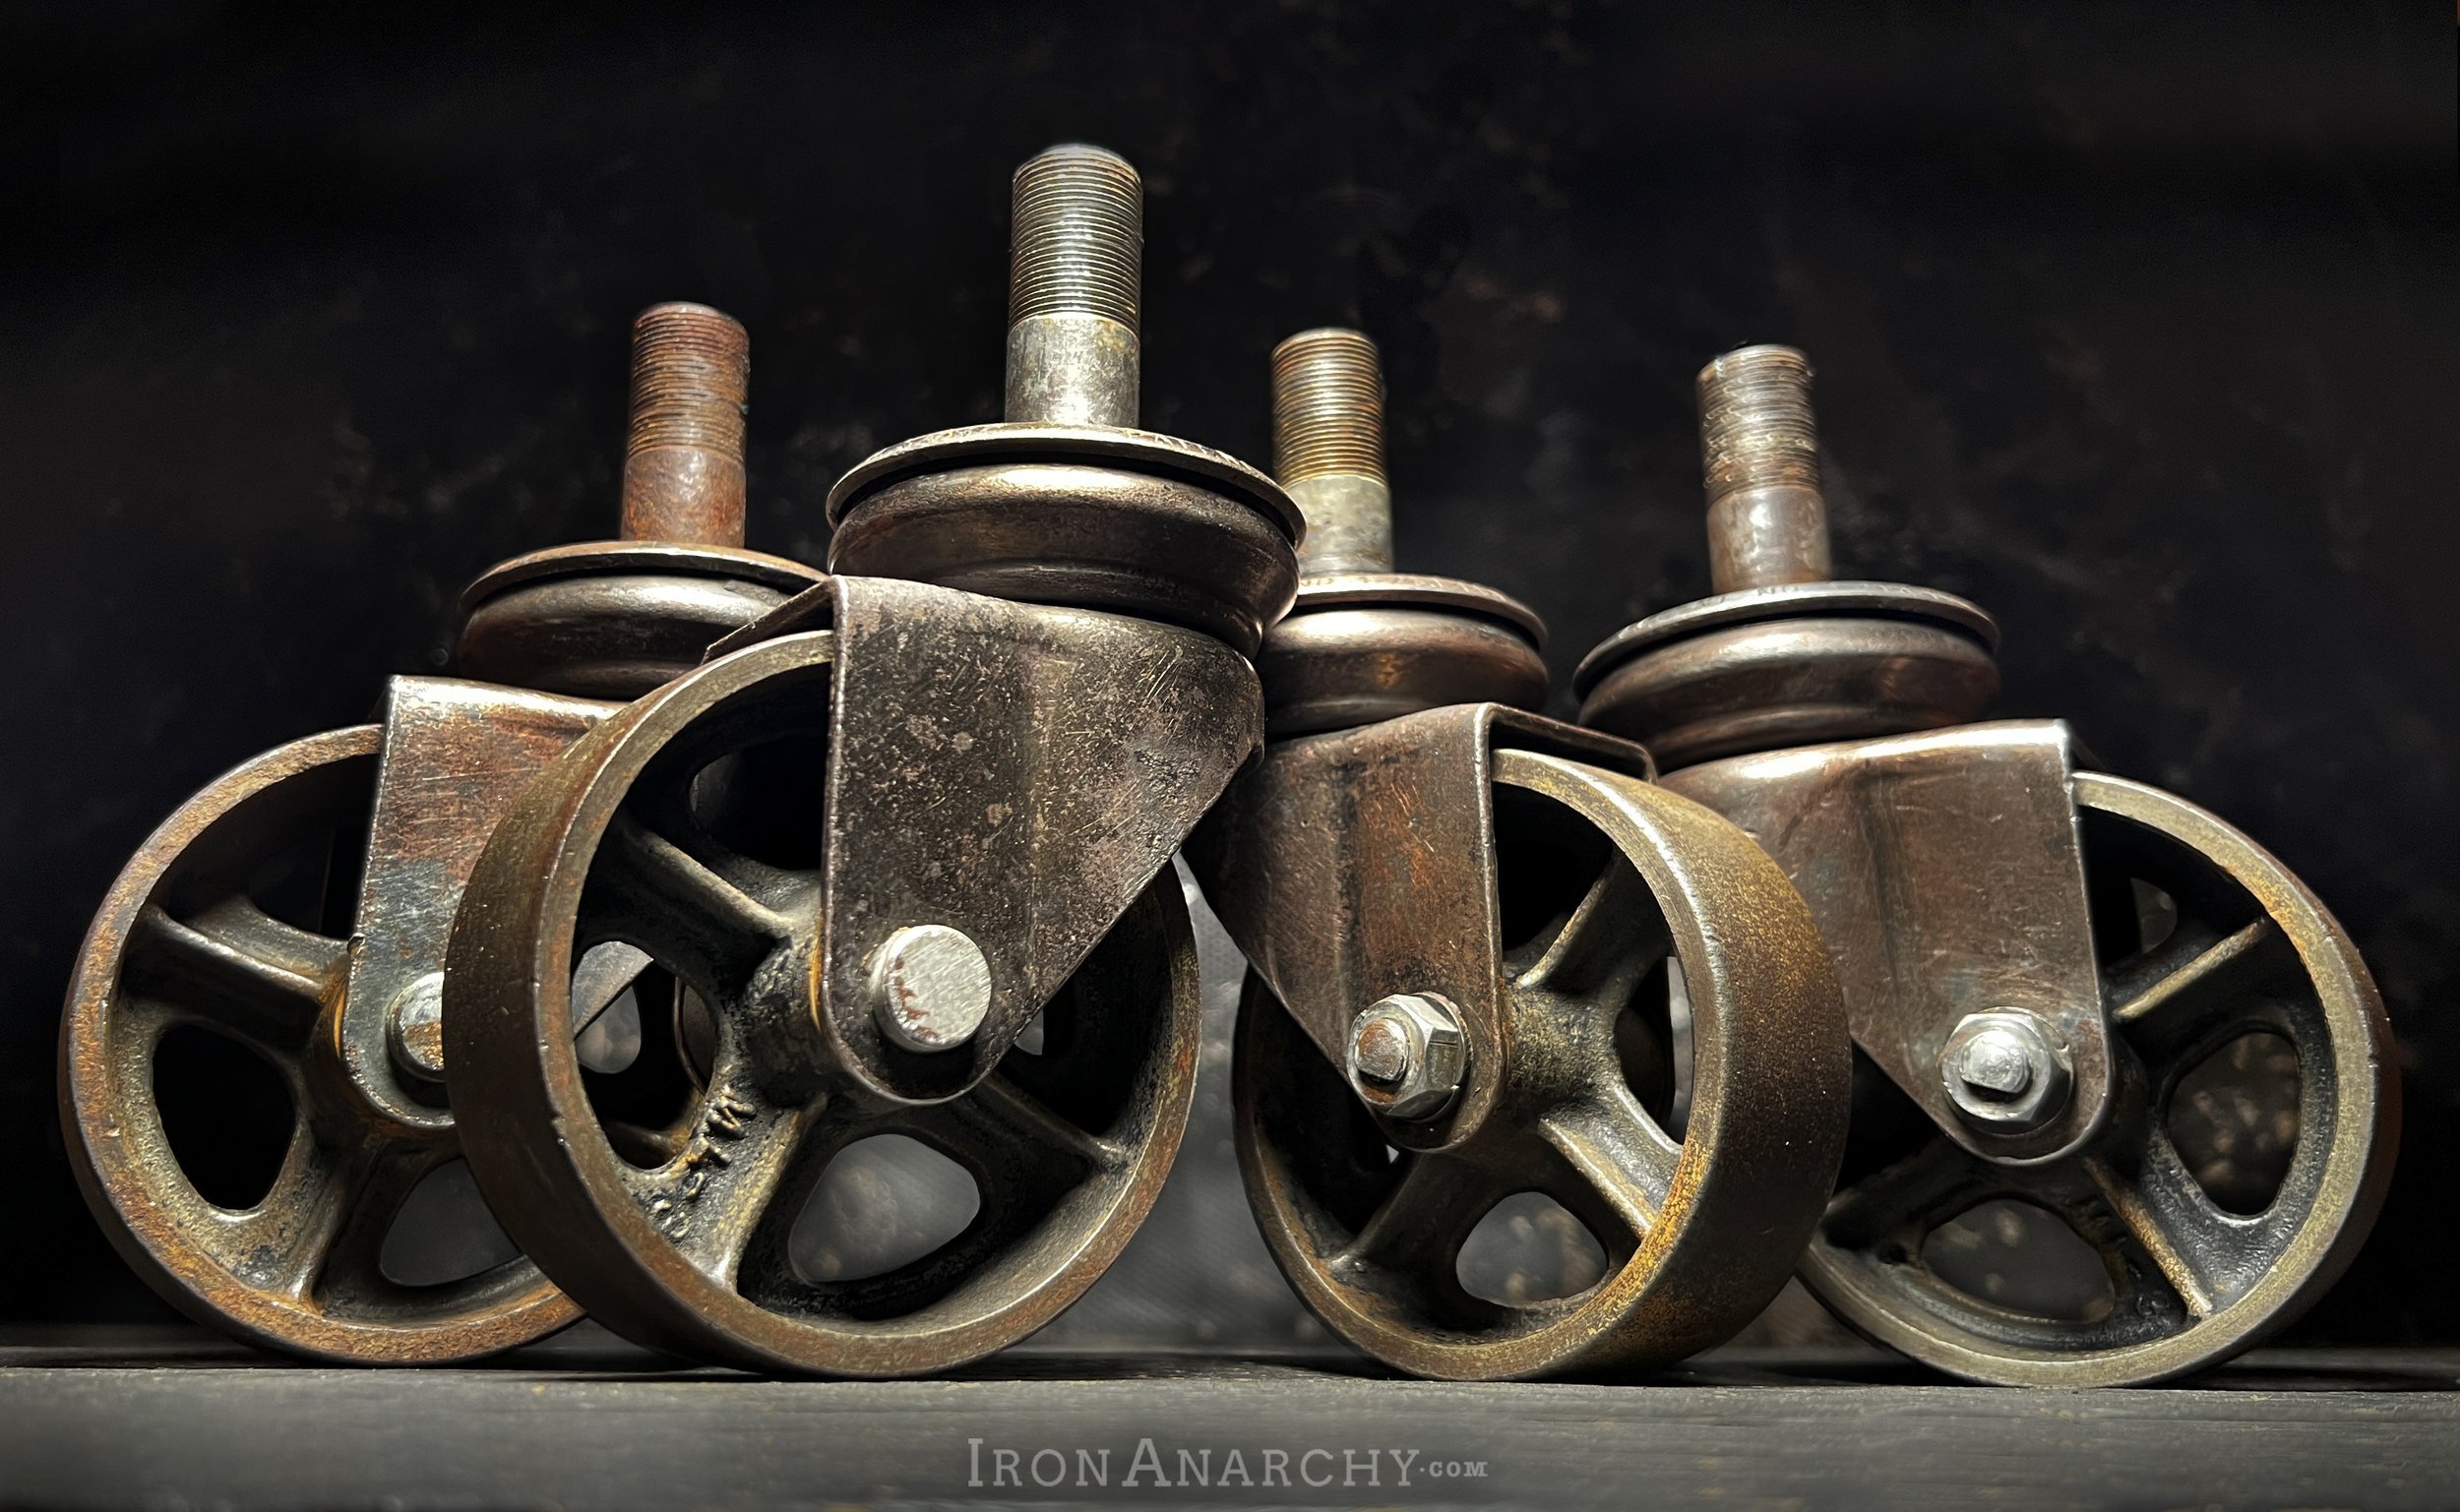 Antique Industrial Casters, Vintage Industrial Caster Wheels